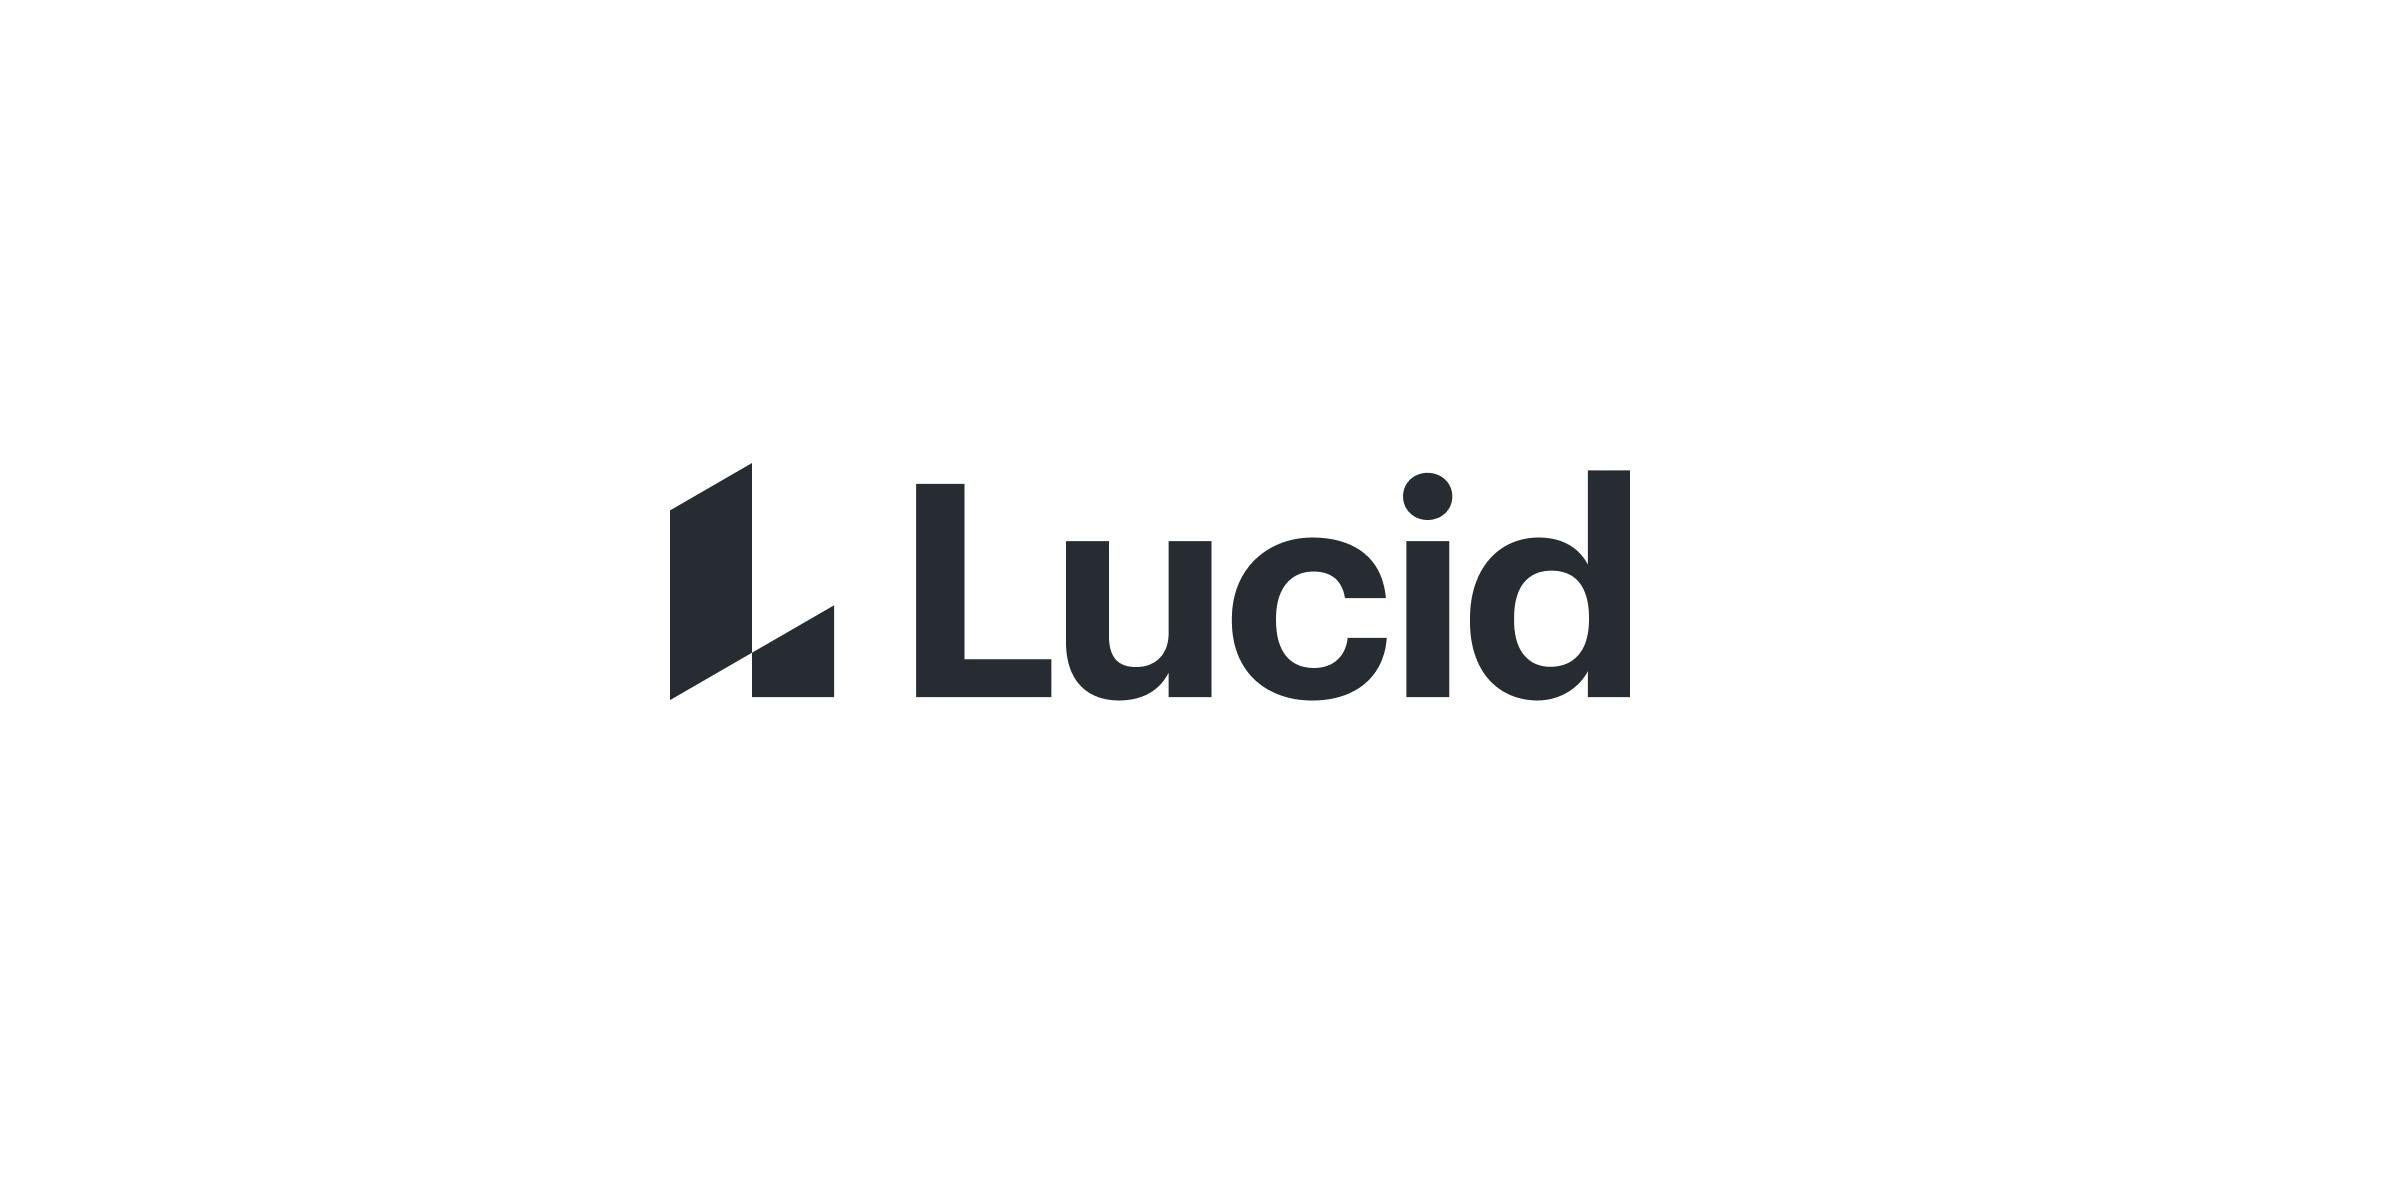 Report: Lucid Software Business Breakdown & Founding Story